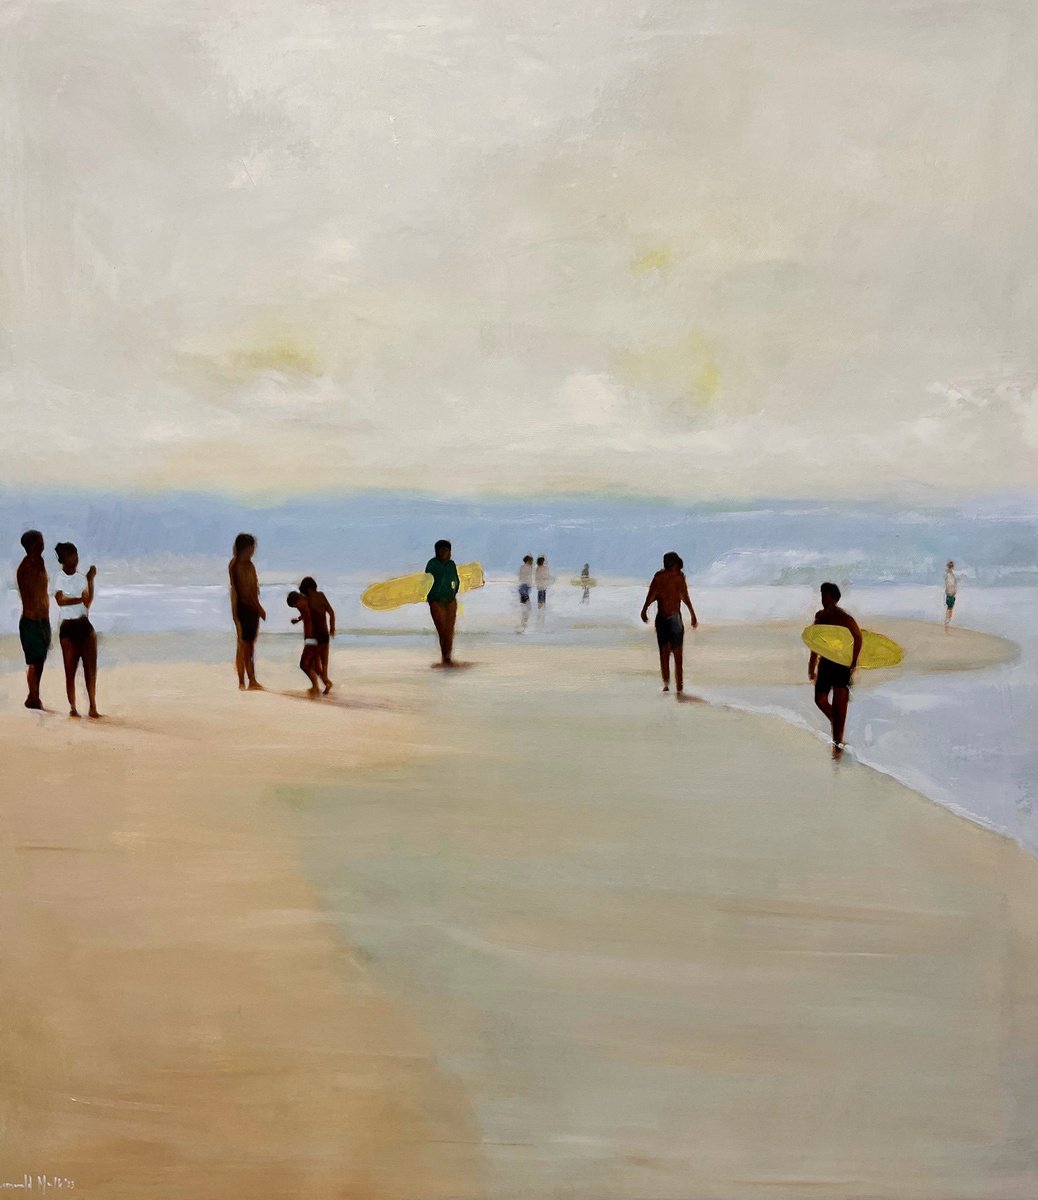 Golden Beach Surfers by Romuald Mulk Musiolik